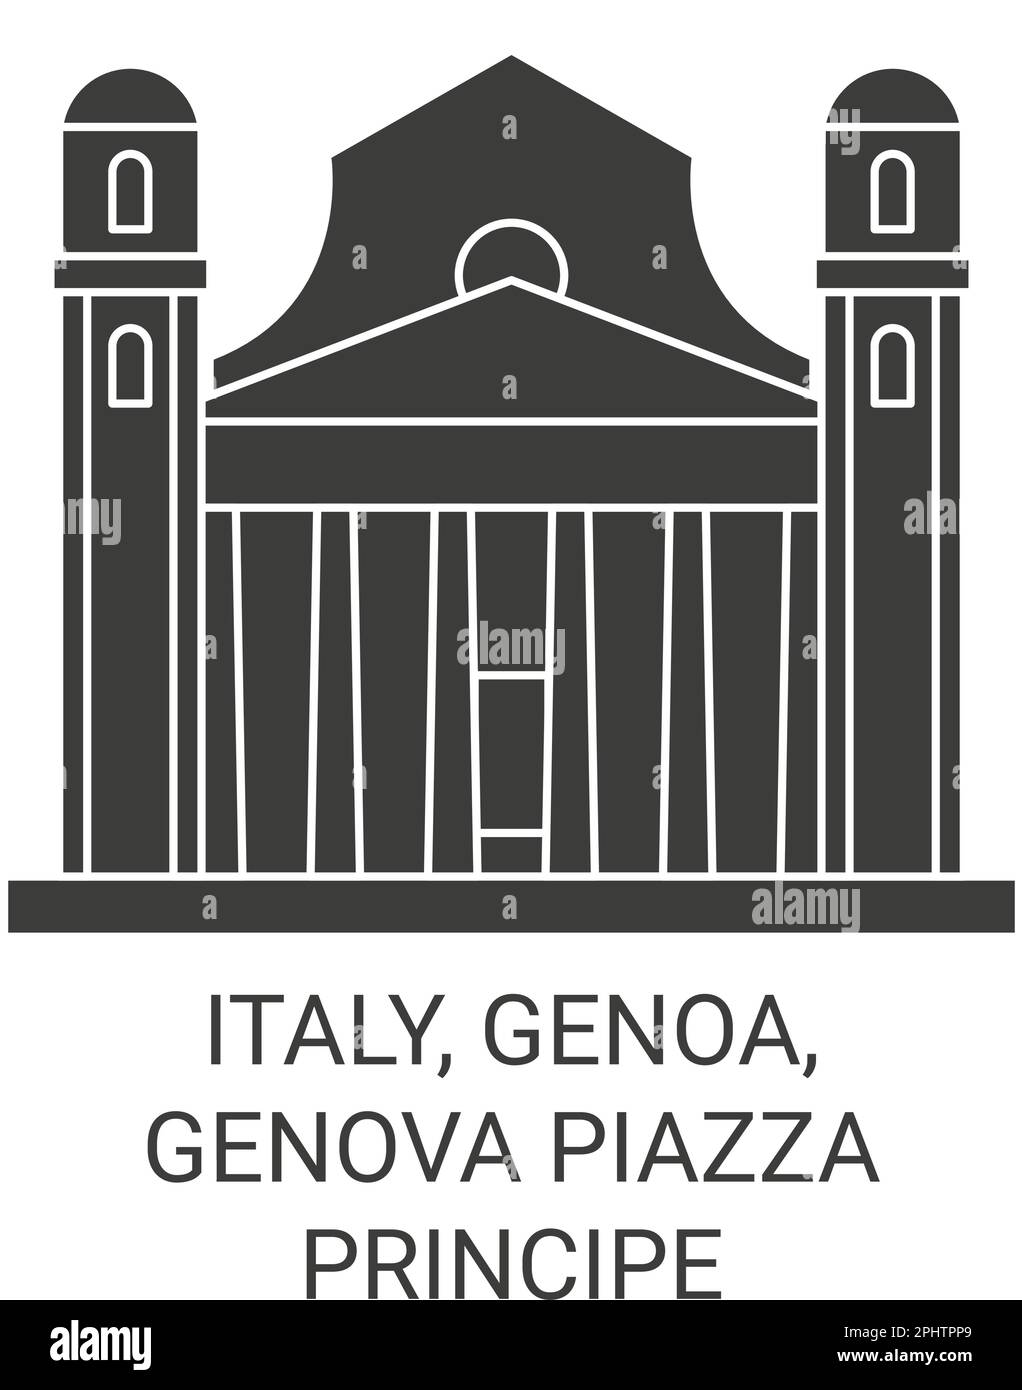 Italy, Genoa, Genova Piazza Principe travel landmark vector illustration Stock Vector